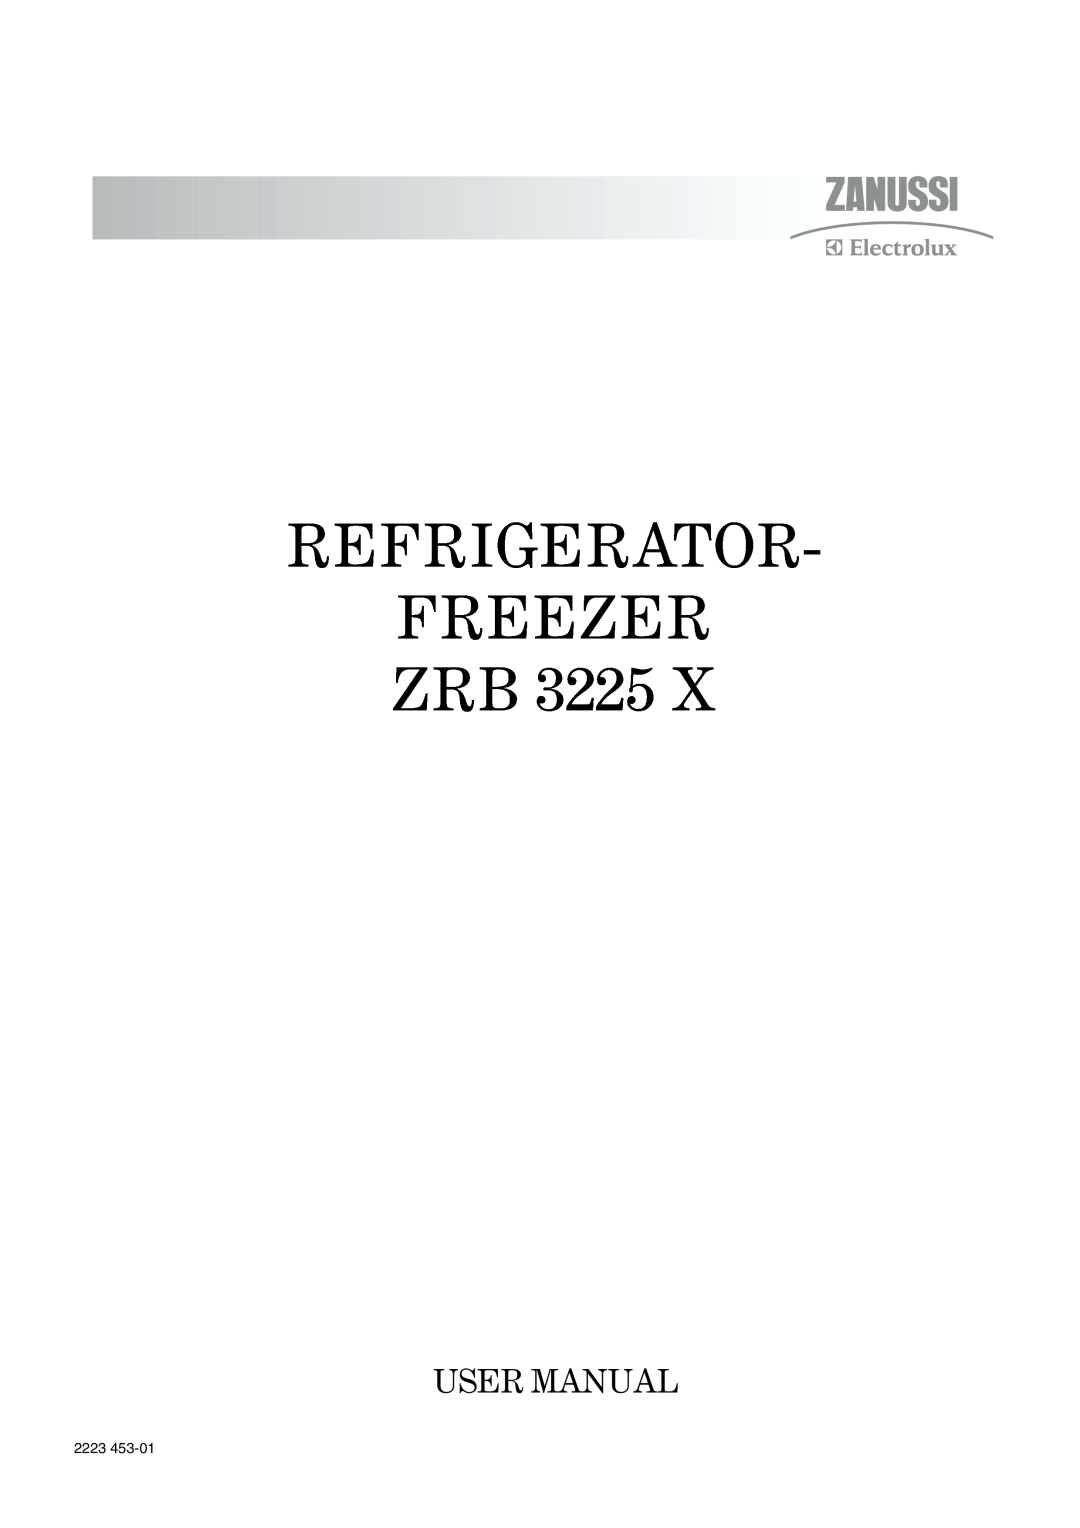 Zanussi ZRB 3225 X user manual Refrigerator Freezer Zrb, 2223 